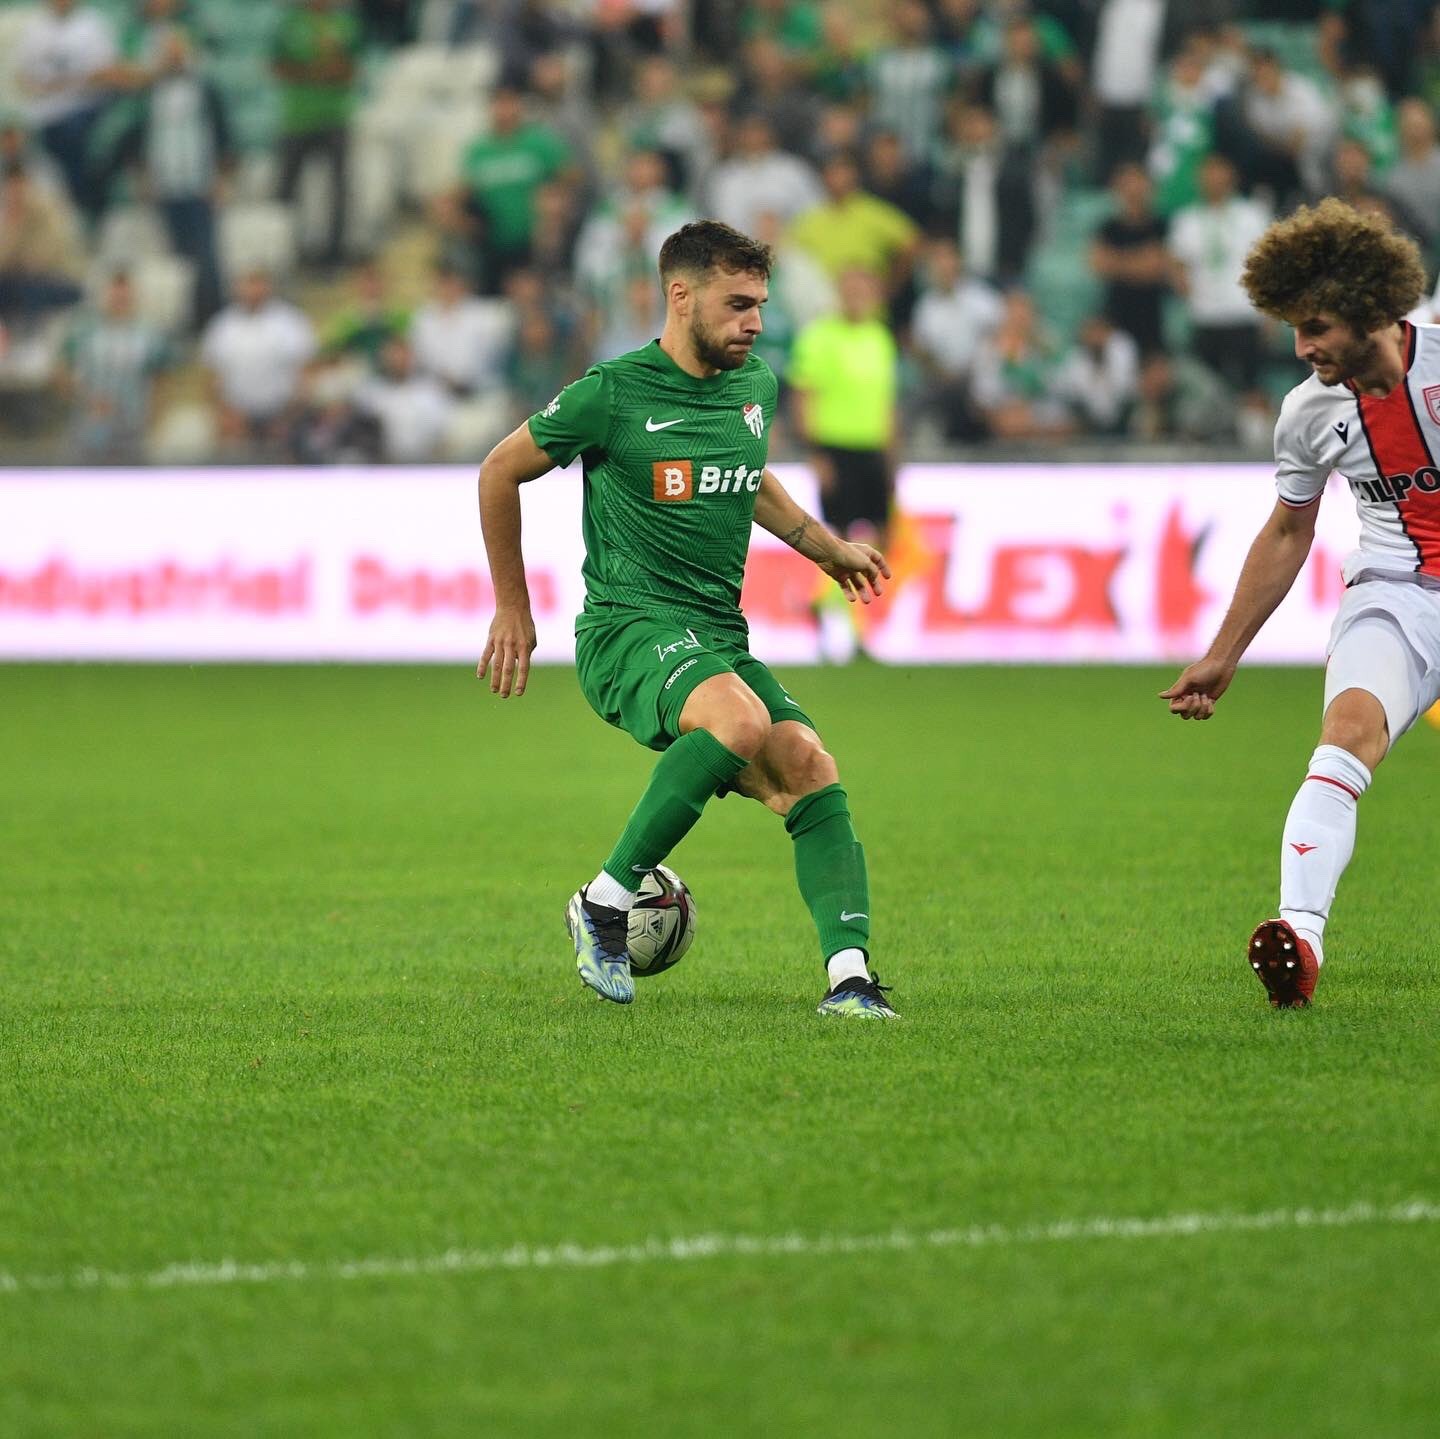 TFF 1. Lig: Bursaspor: 4 - Yılport Samsunspor: 1
